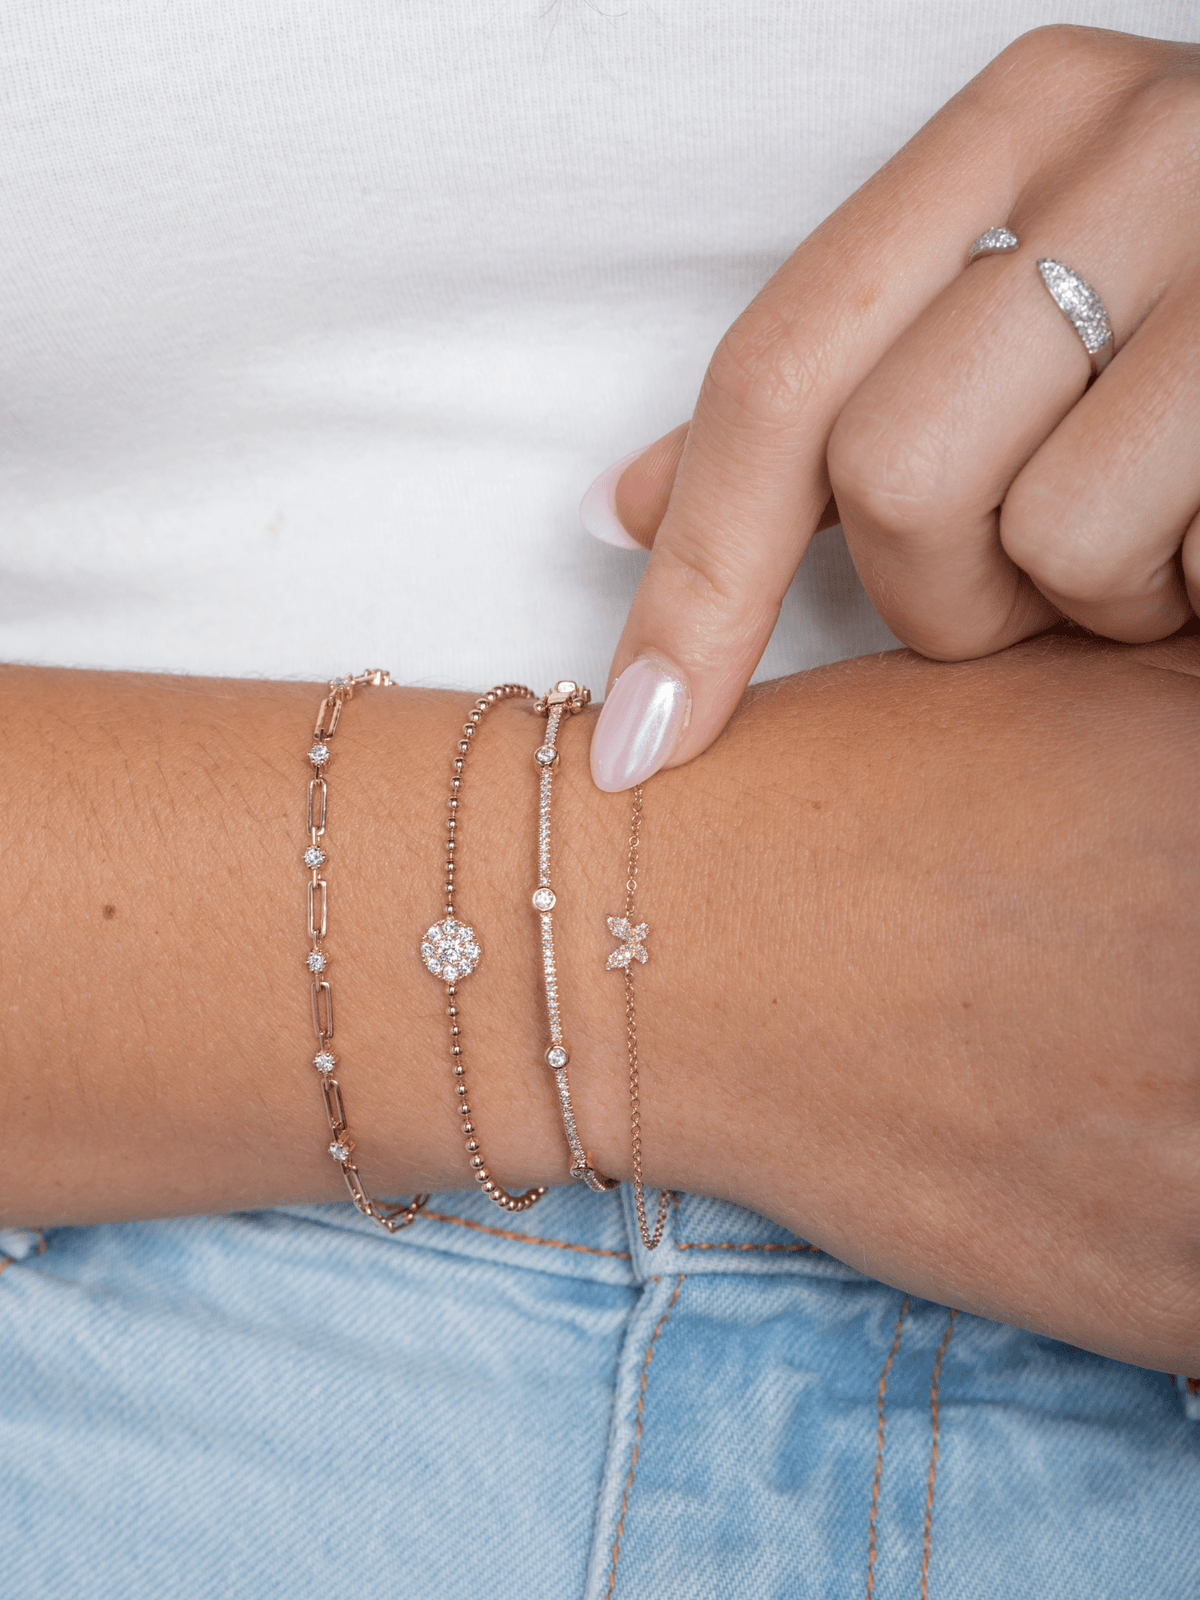 Ava Diamond and Paperclip Chain Bracelet 14K - LeMel